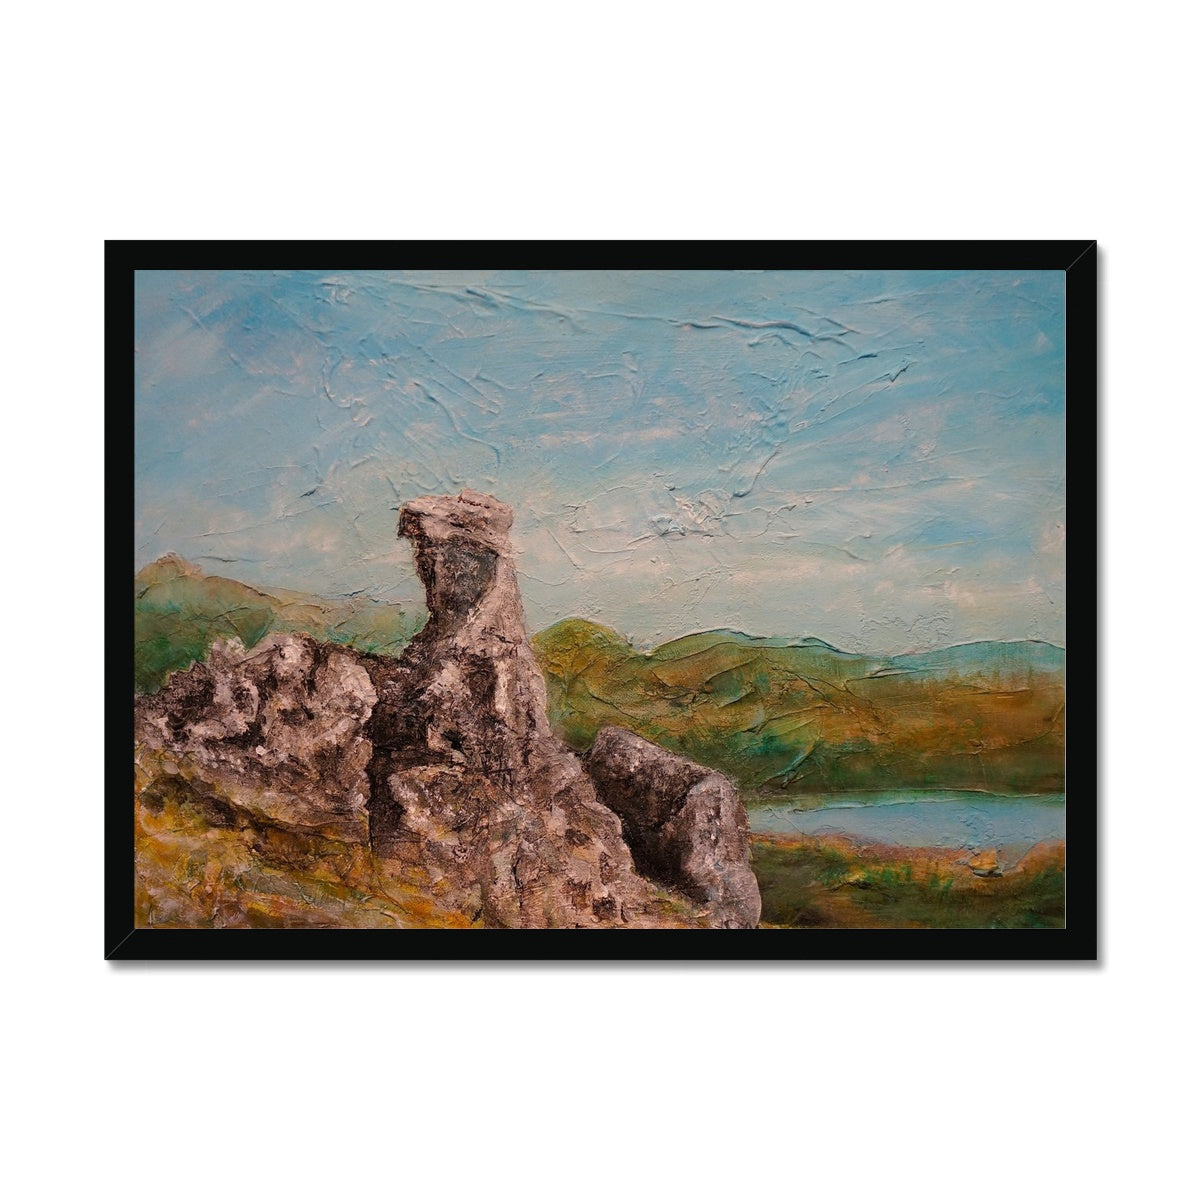 The Cobbler ii Painting | Framed Prints From Scotland-Framed Prints-Scottish Lochs & Mountains Art Gallery-A2 Landscape-Black Frame-Paintings, Prints, Homeware, Art Gifts From Scotland By Scottish Artist Kevin Hunter